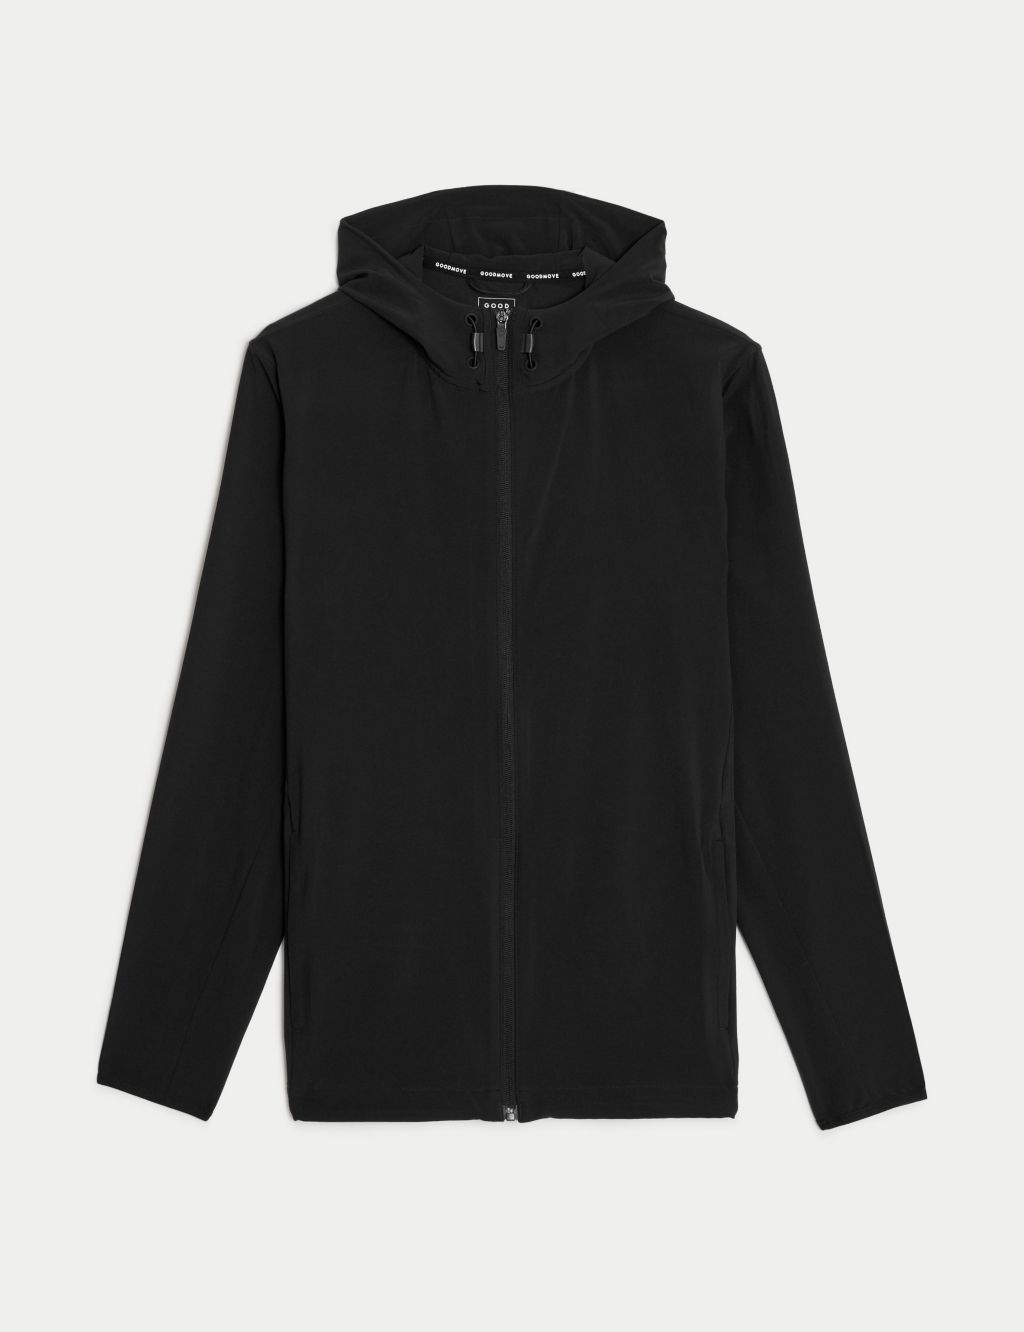 Zip Up Long Sleeve Hooded Jacket | Goodmove | M&S